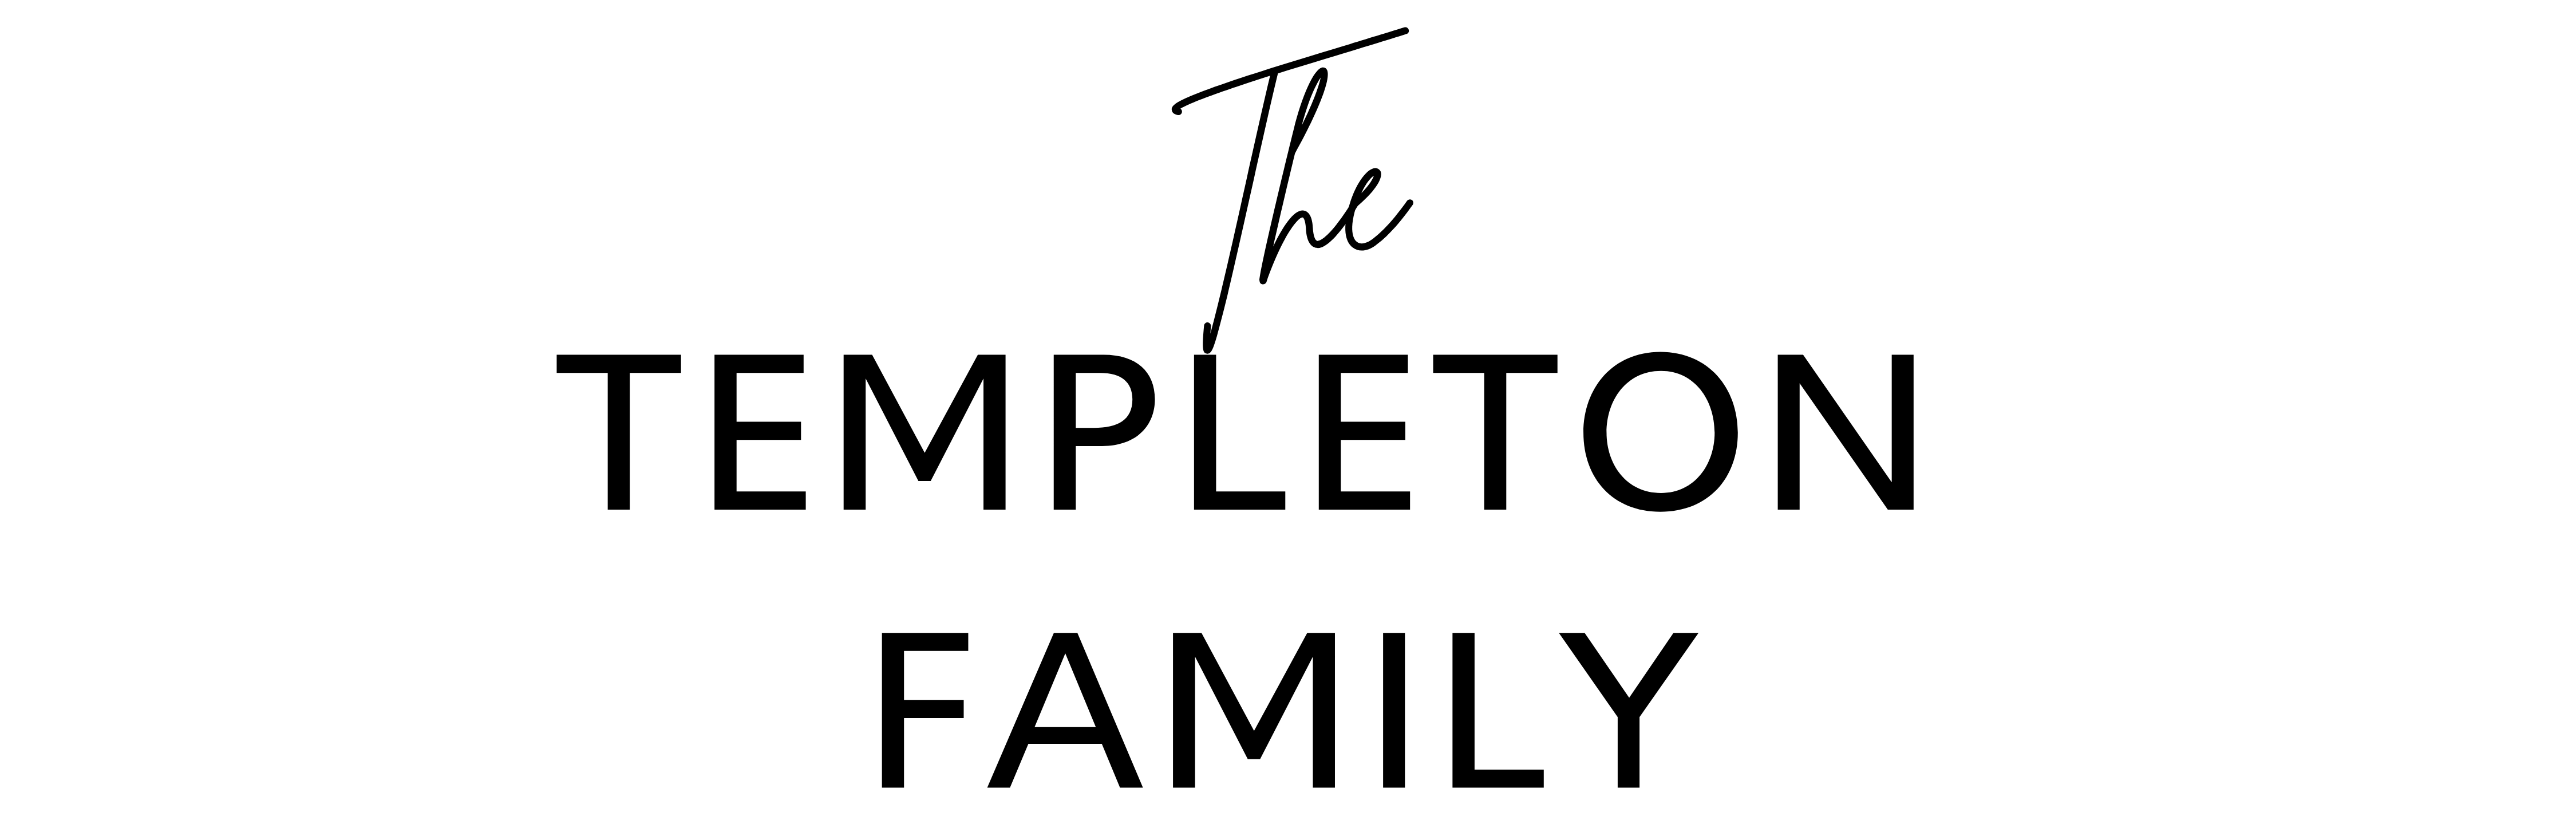 The Templeton Family